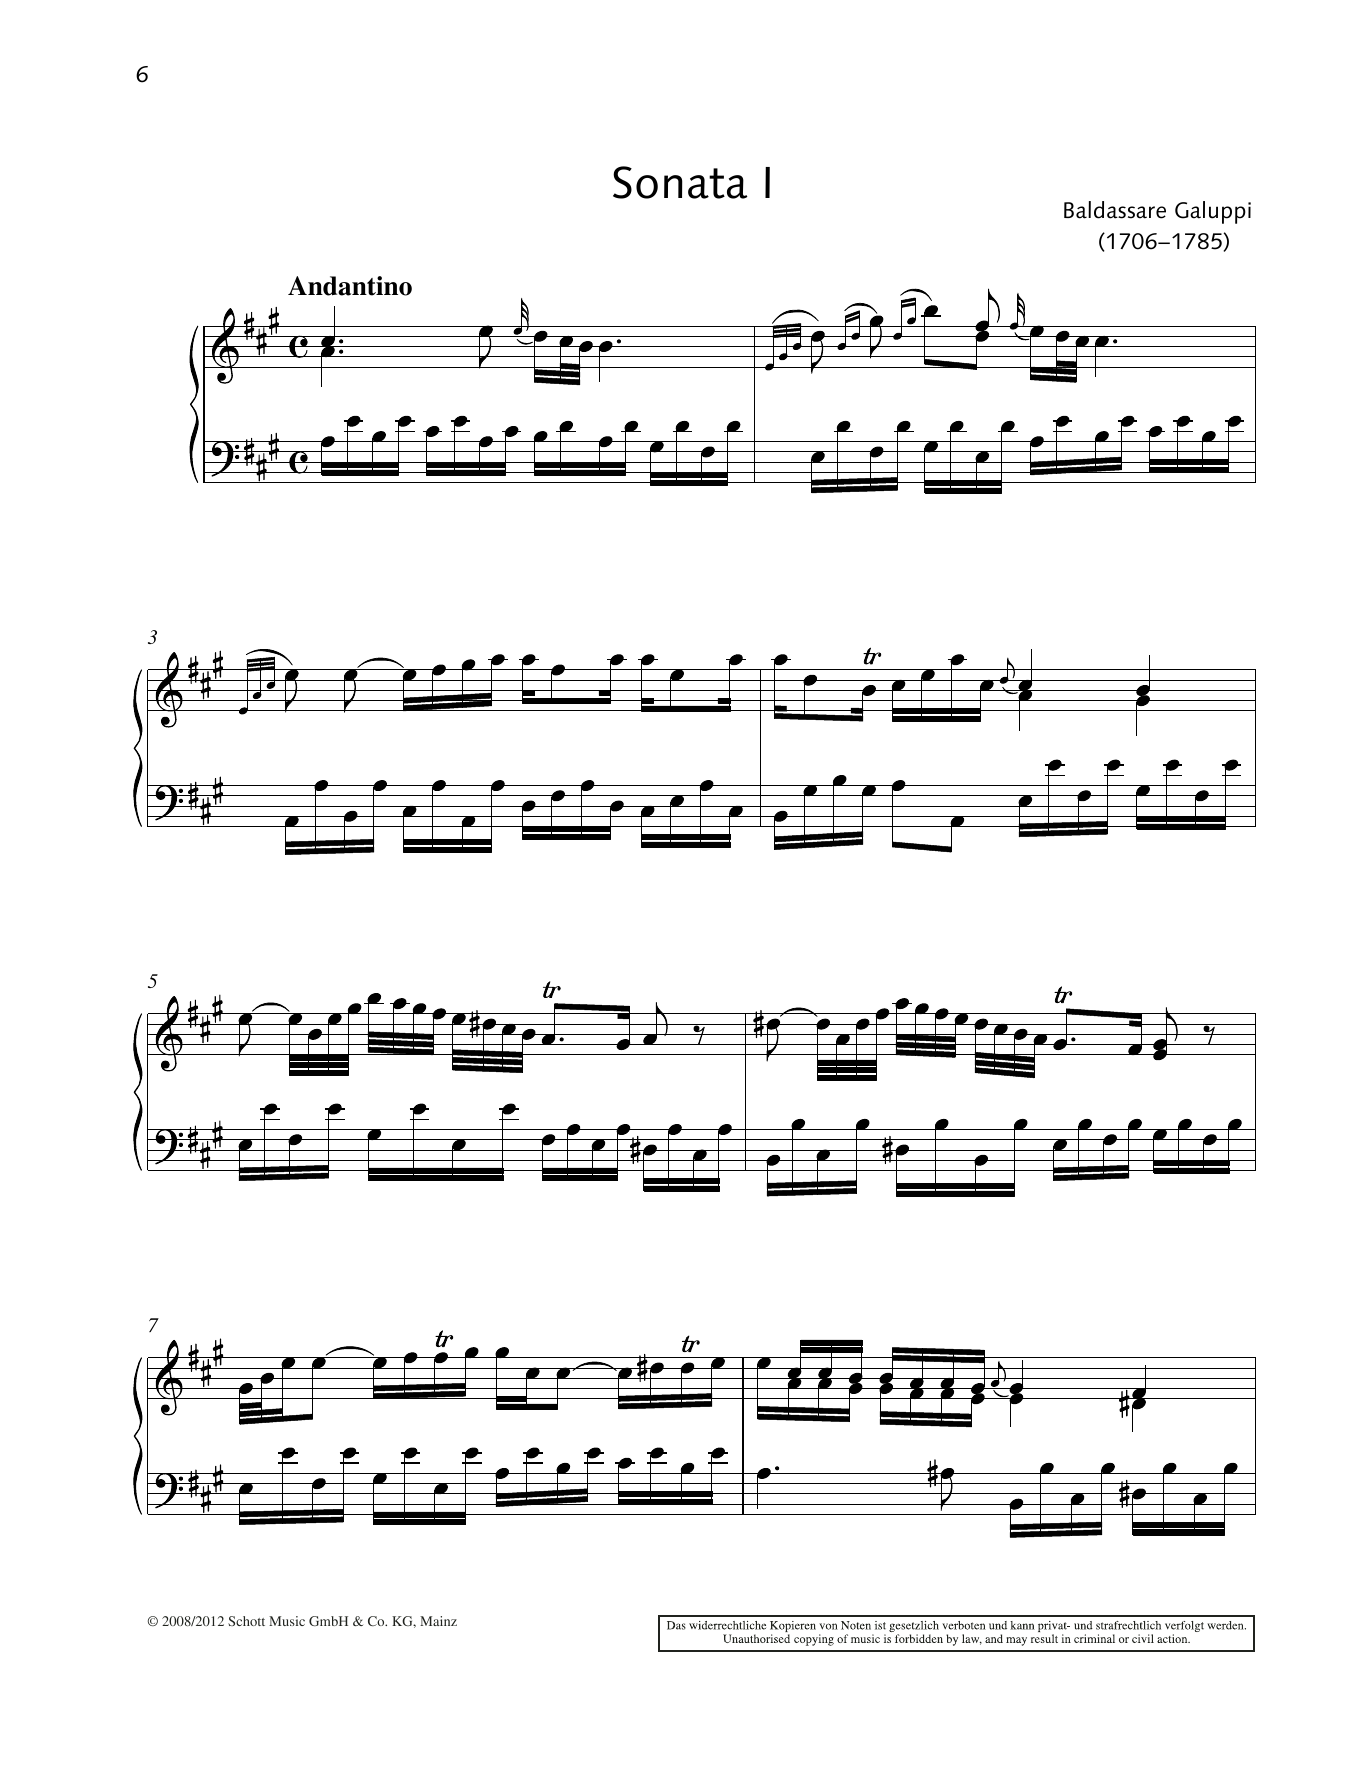 Baldassare Galuppi Sonata I A major Sheet Music Notes & Chords for Piano Solo - Download or Print PDF